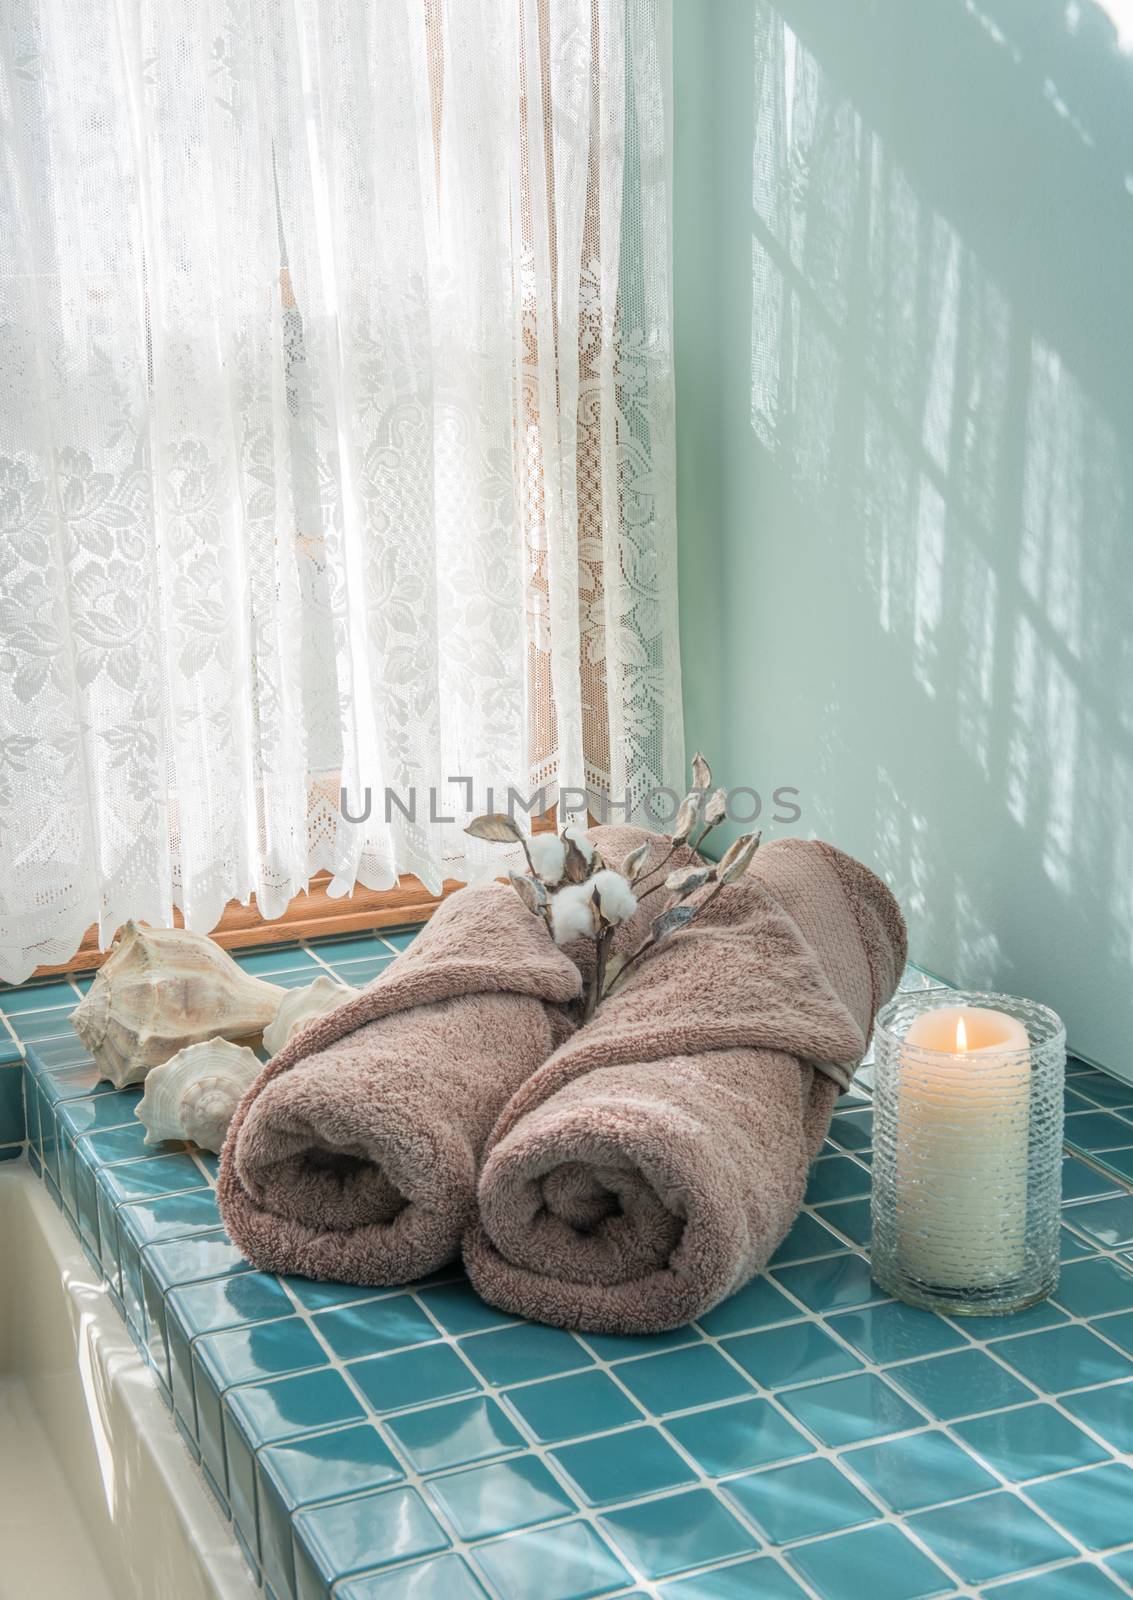 Luxury Master Bath Escape by krisblackphotography